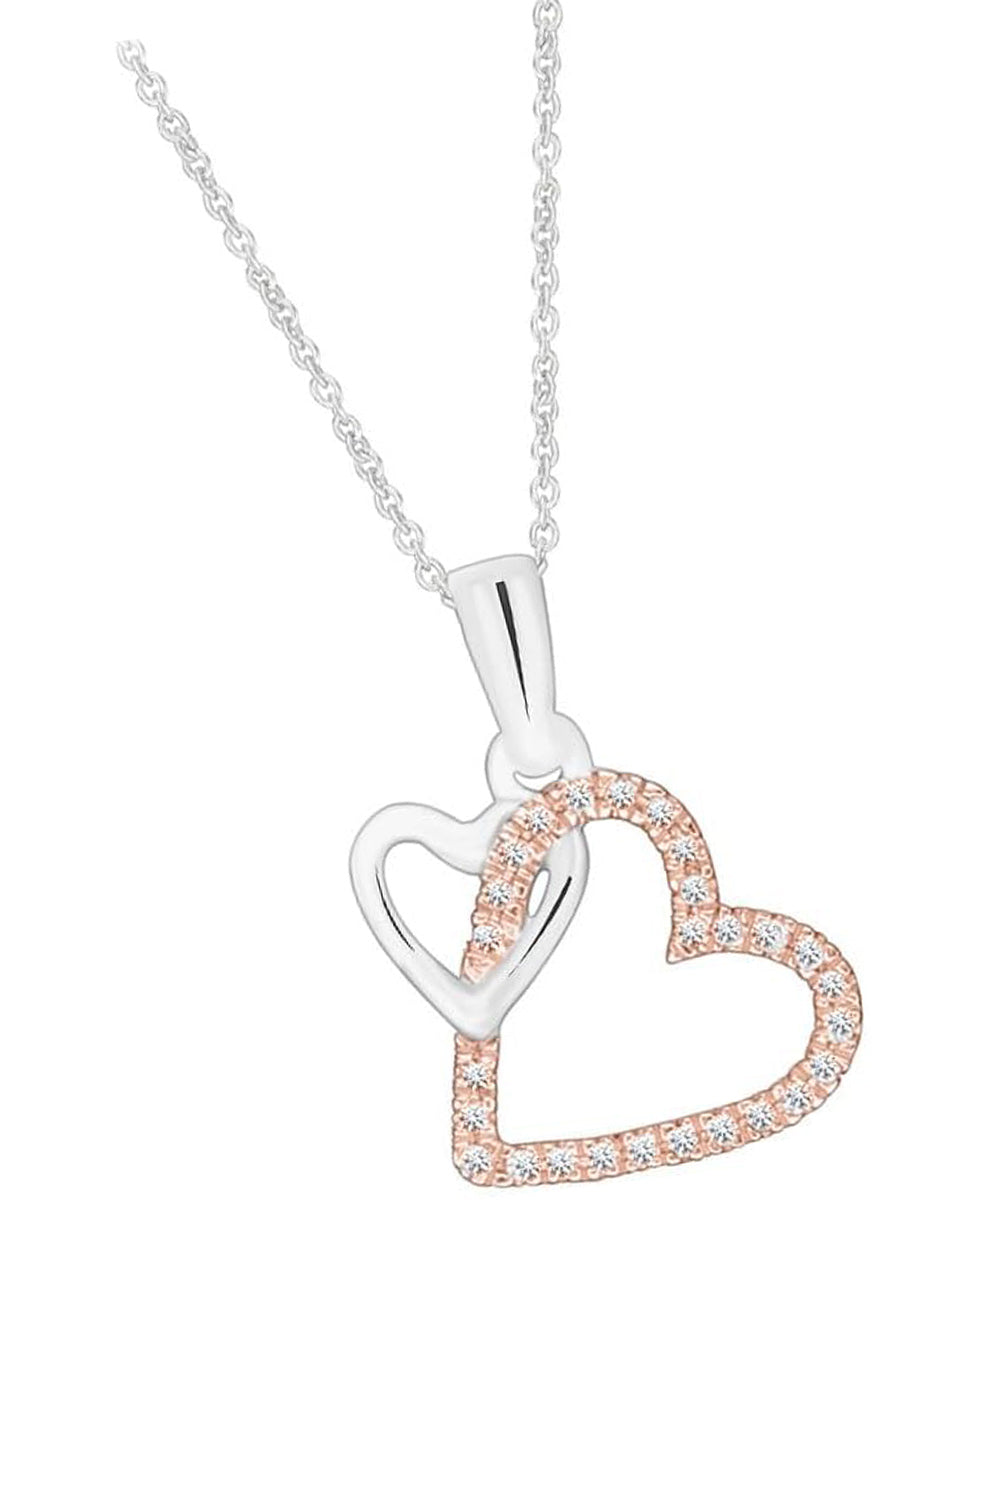 White Gold Color Double Interlocking Love Heart Pendant Necklace, 